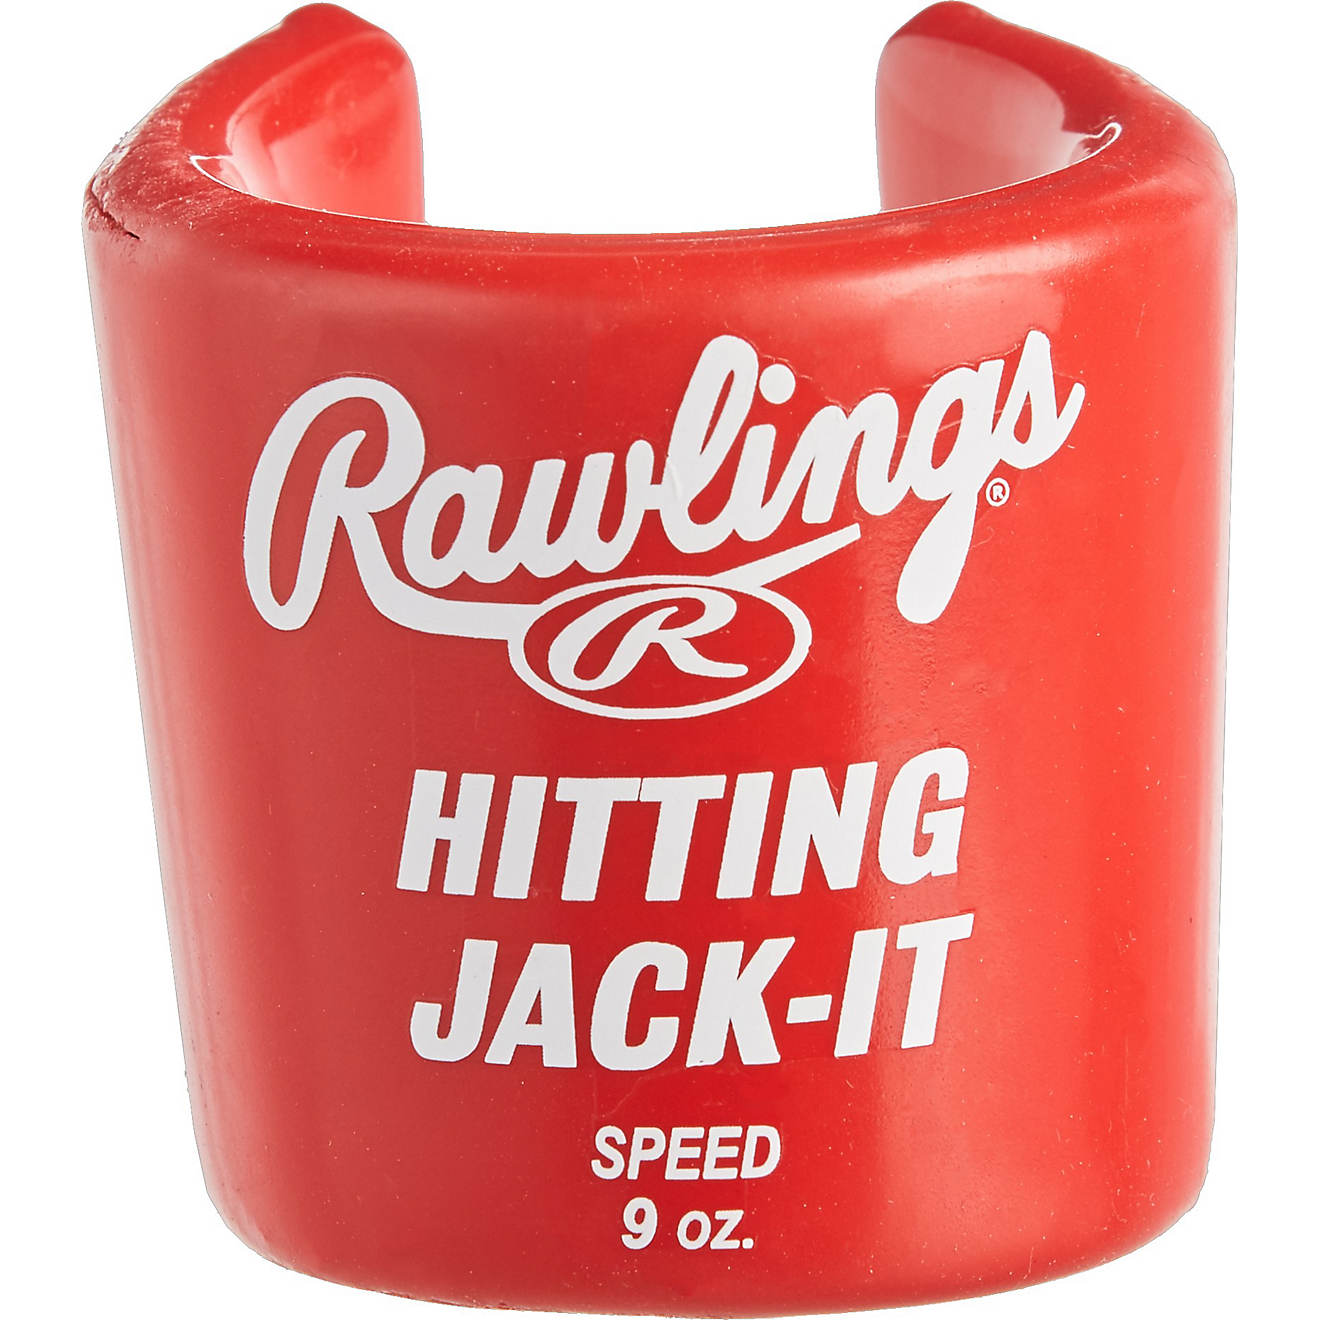 Rawlings Hitting Jack-it 